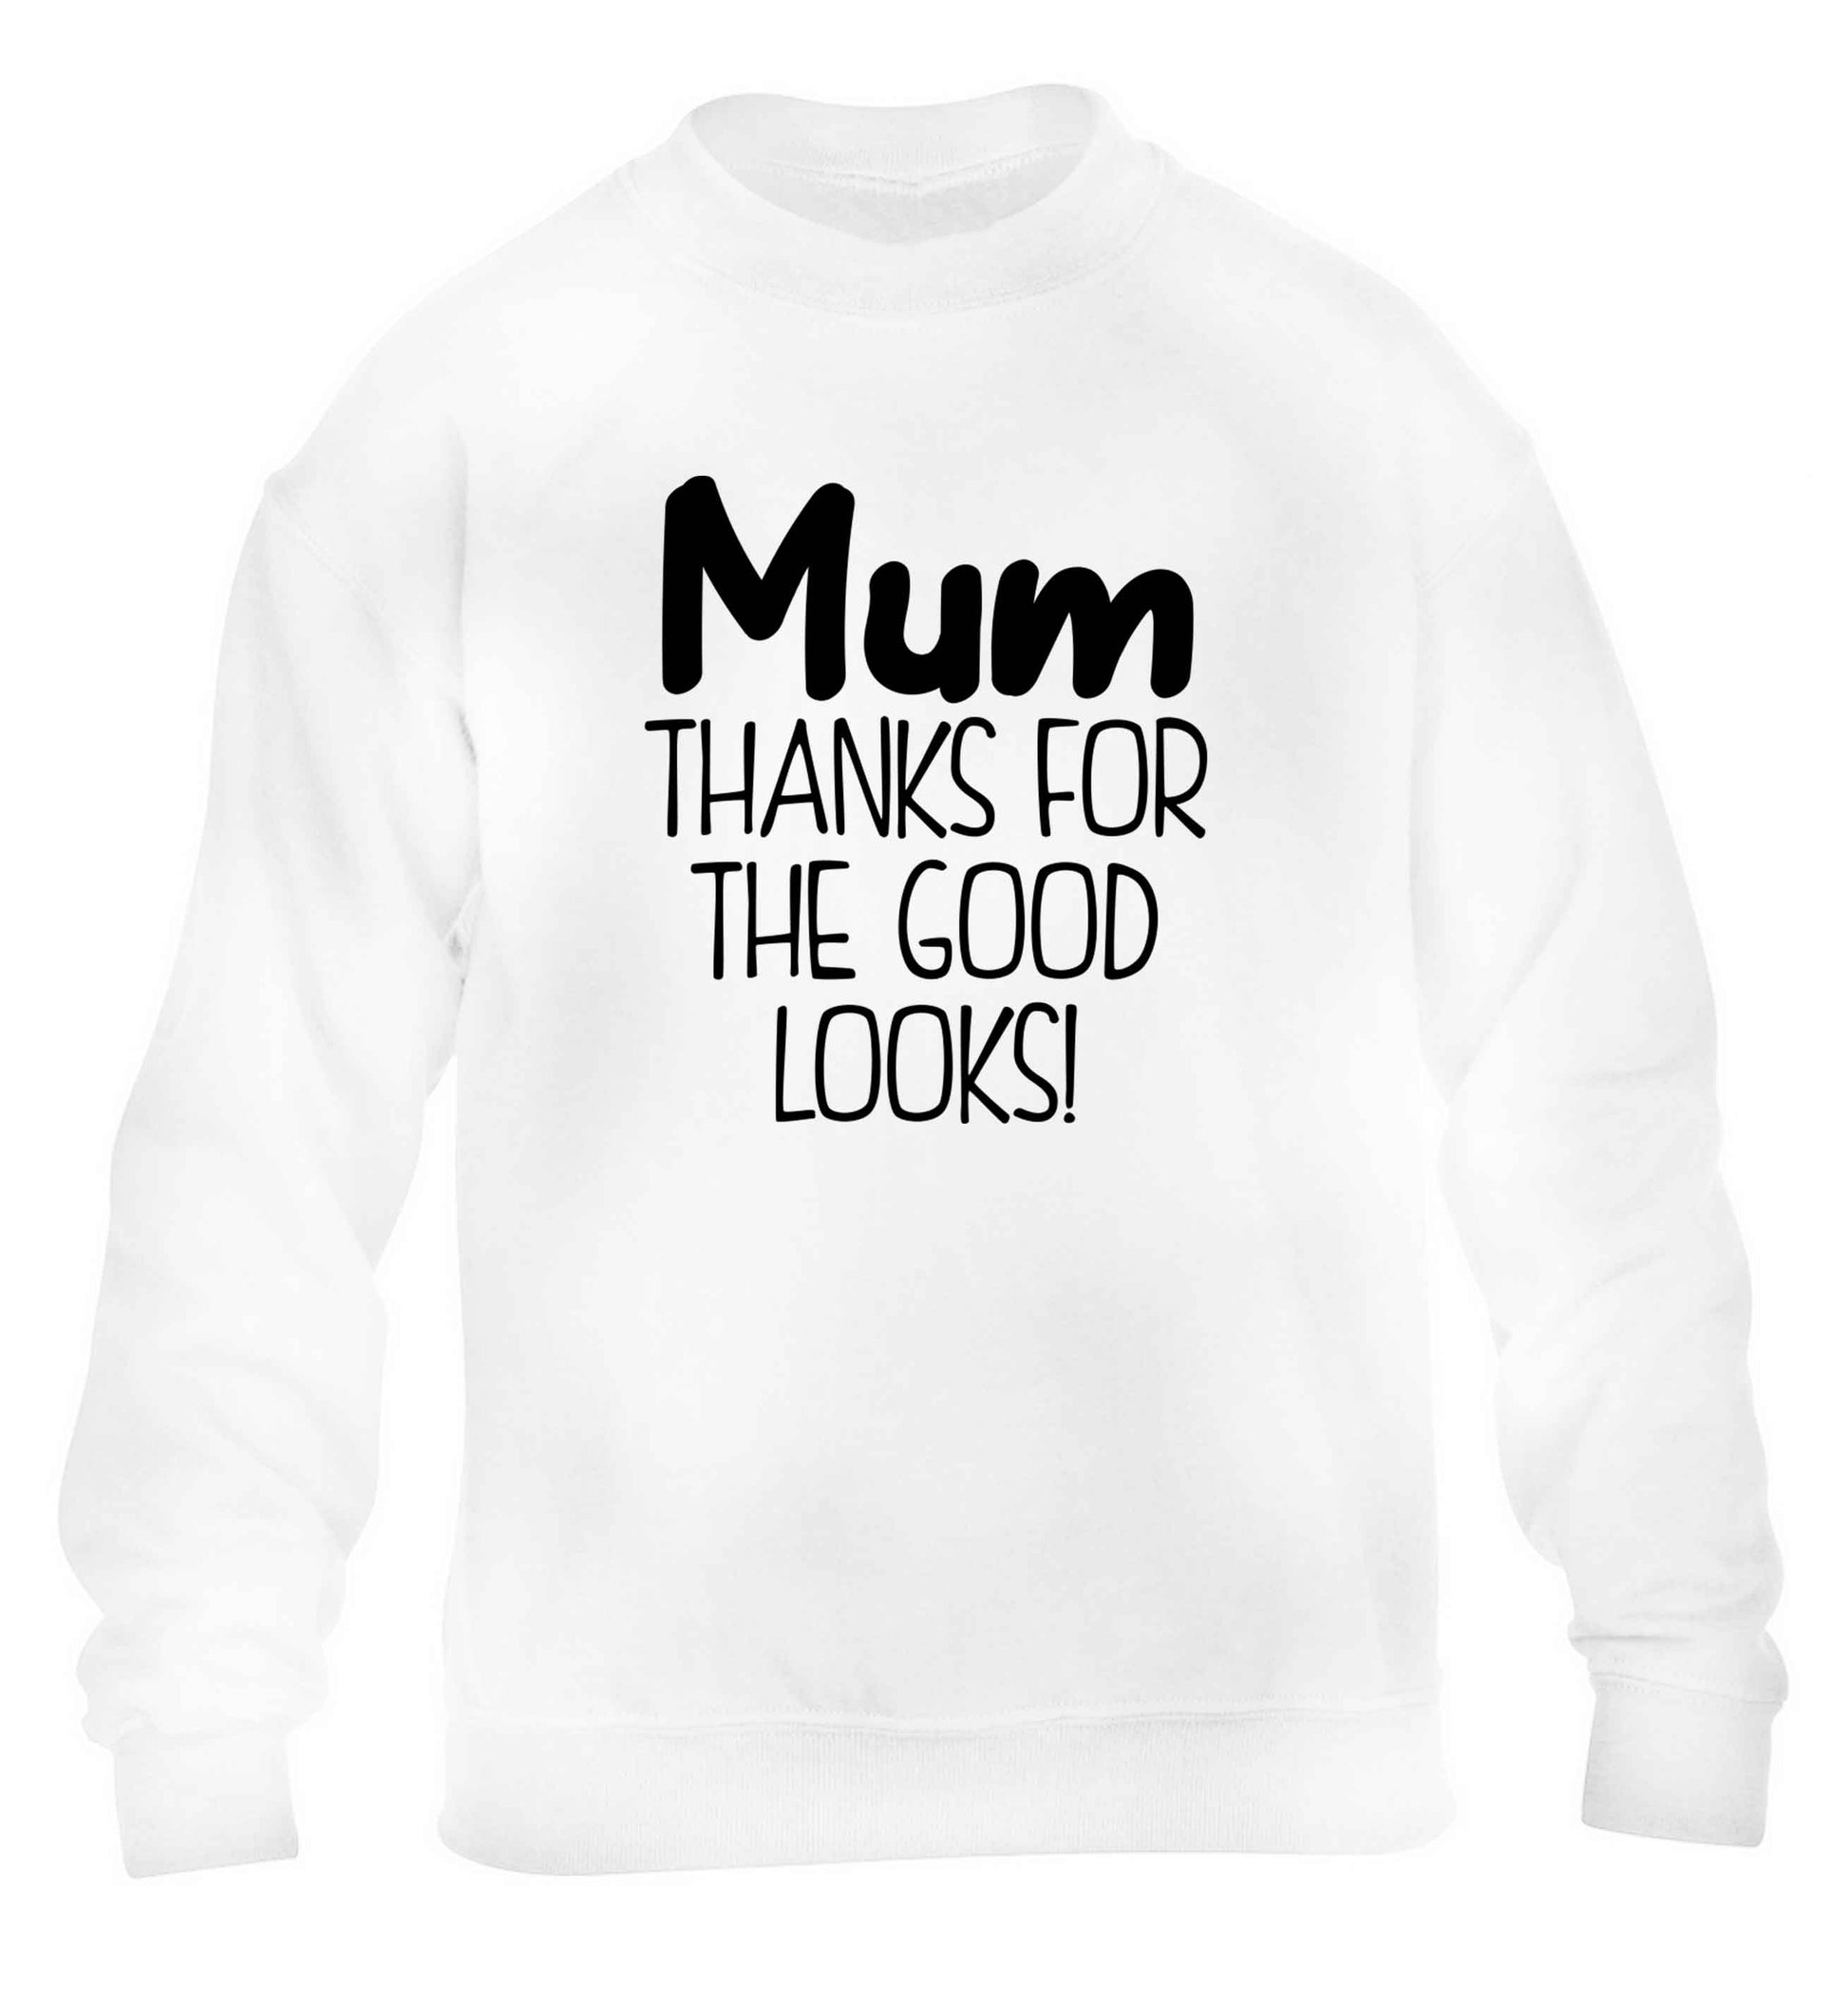 Mum thanks for the good looks! children's white sweater 12-13 Years